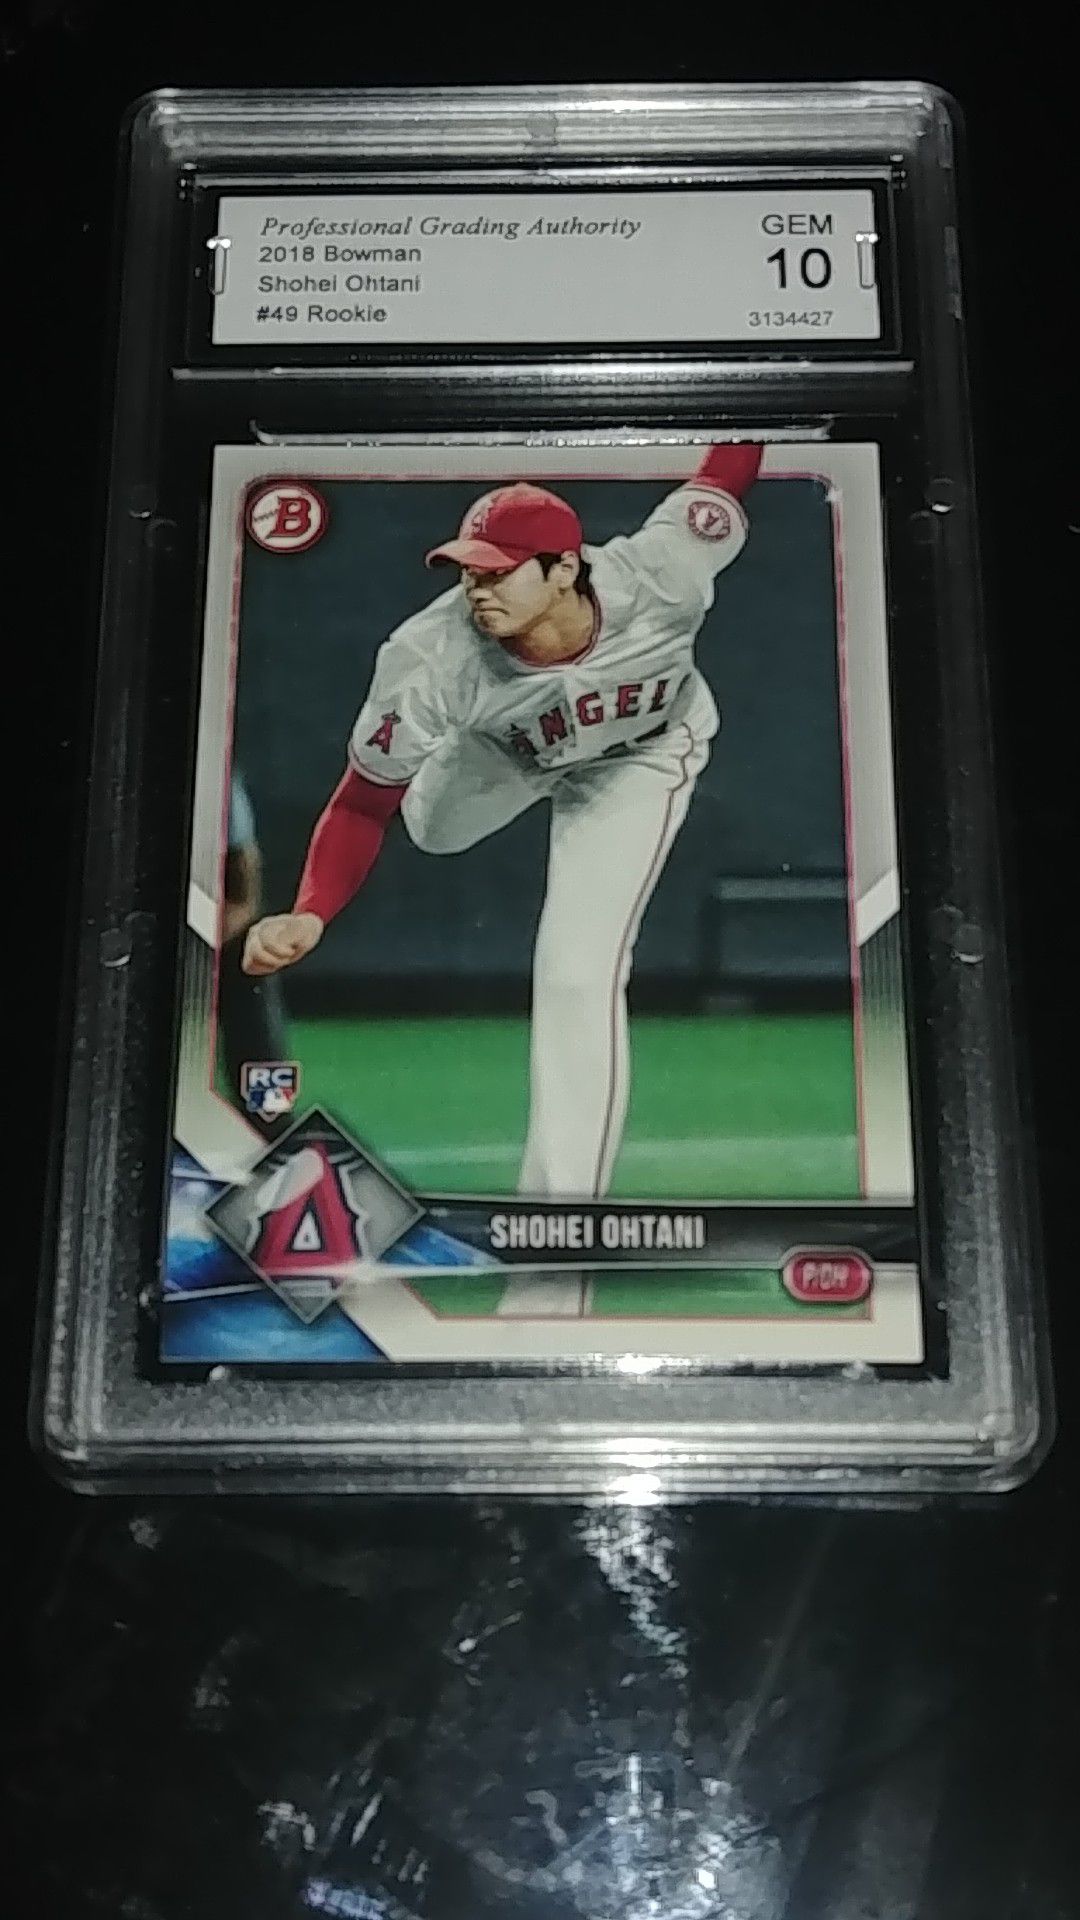 2018 Bowman Shohei Ohtani RC Baseball Card #49